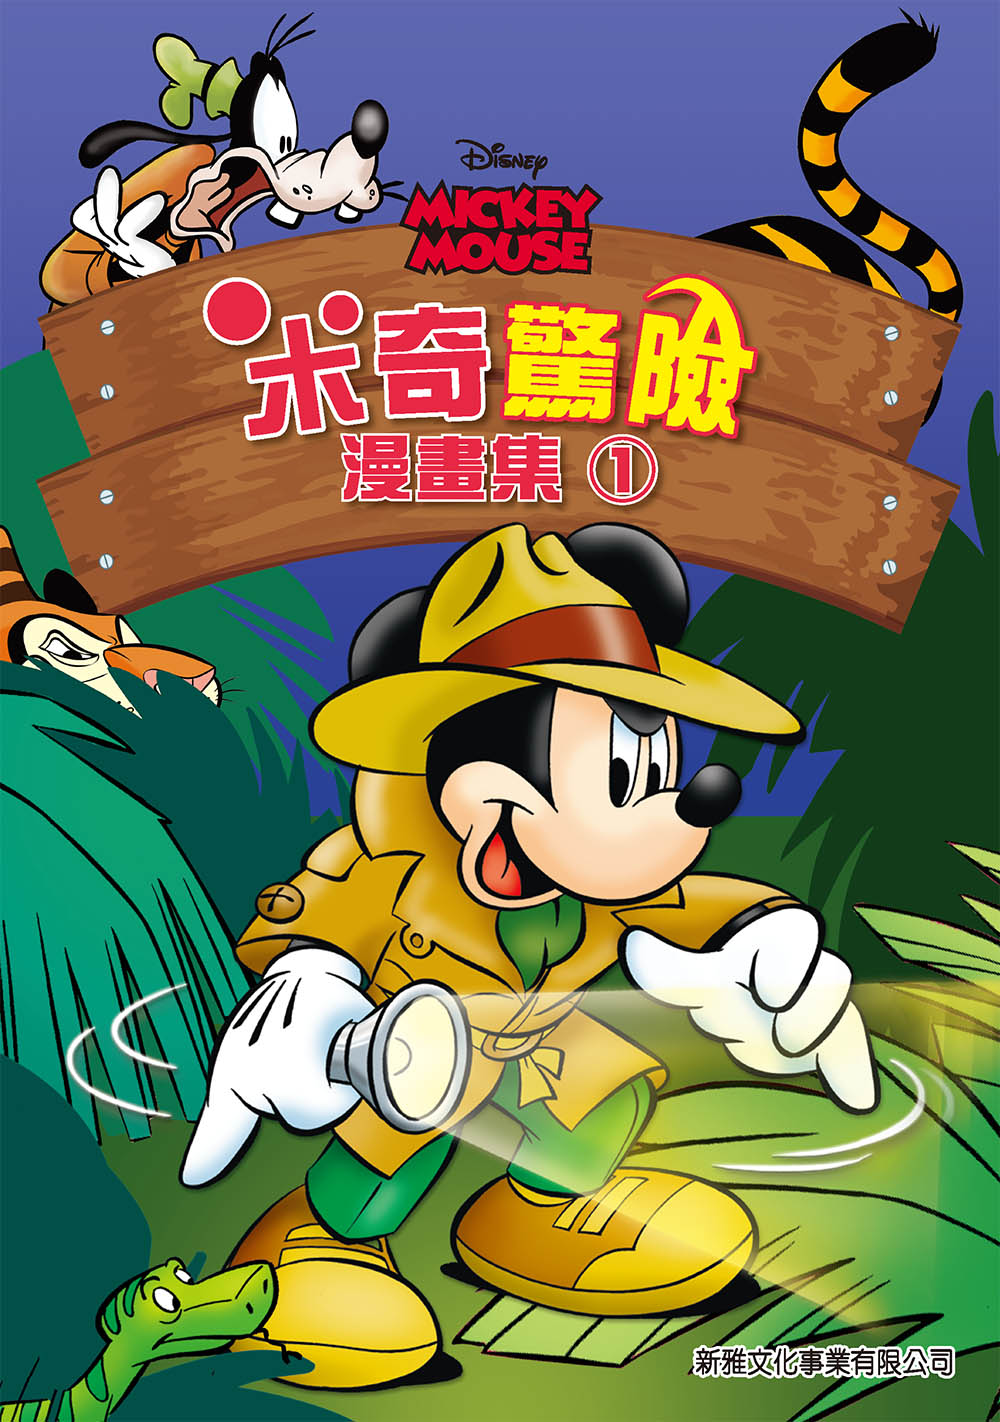 Mickey's Adventures: Graphic Novel #1 • 米奇驚險漫畫集1